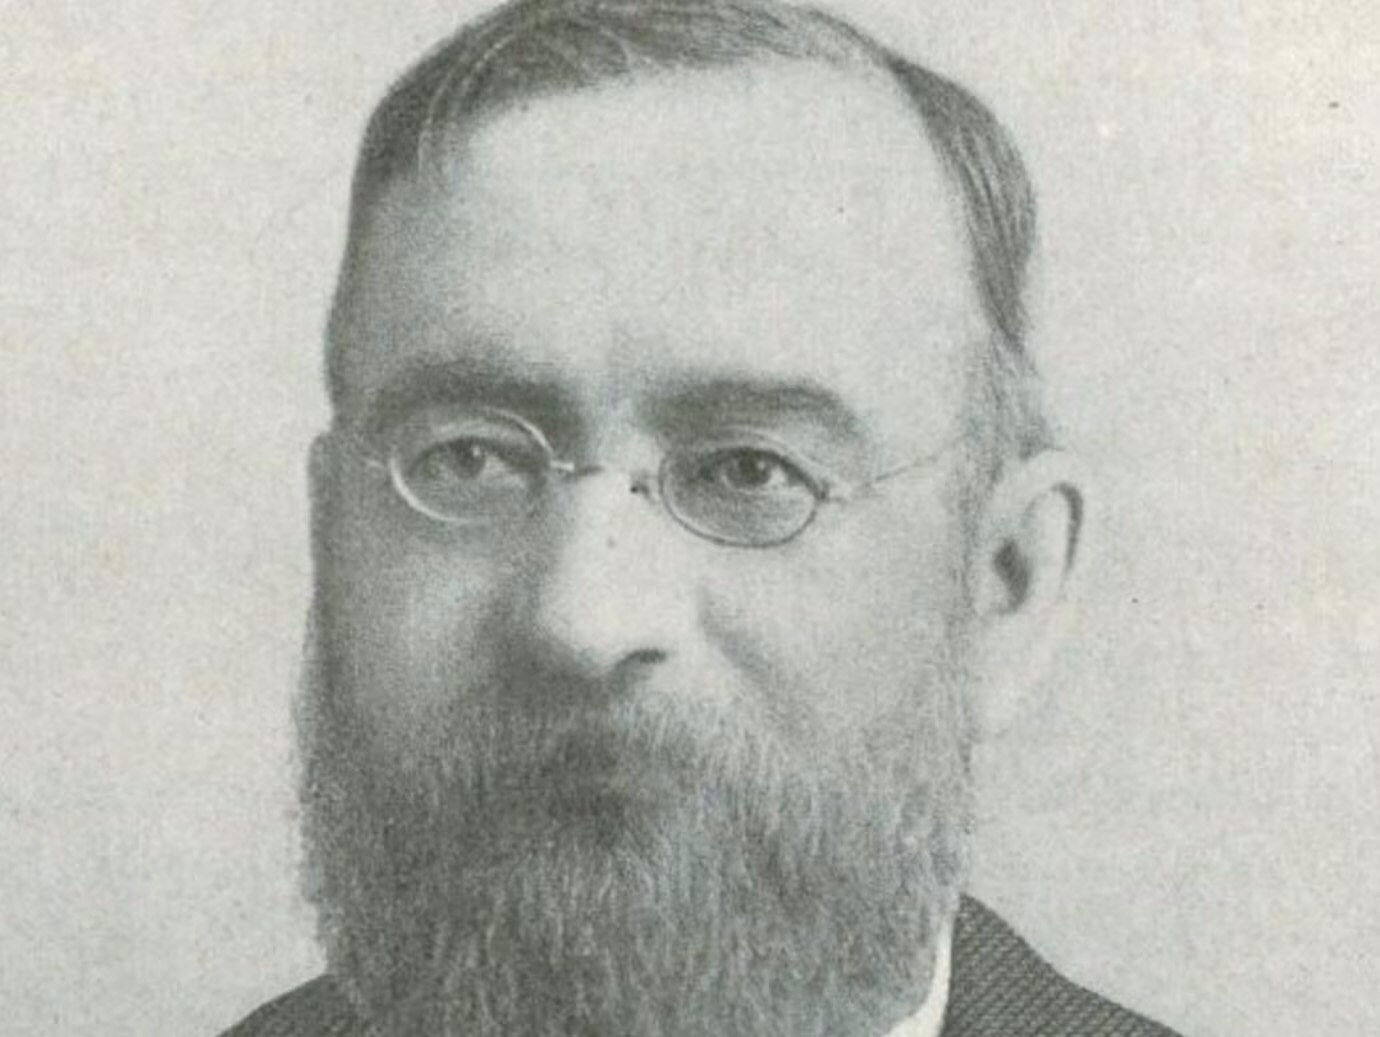 William Plankinton, President, 1885-1901